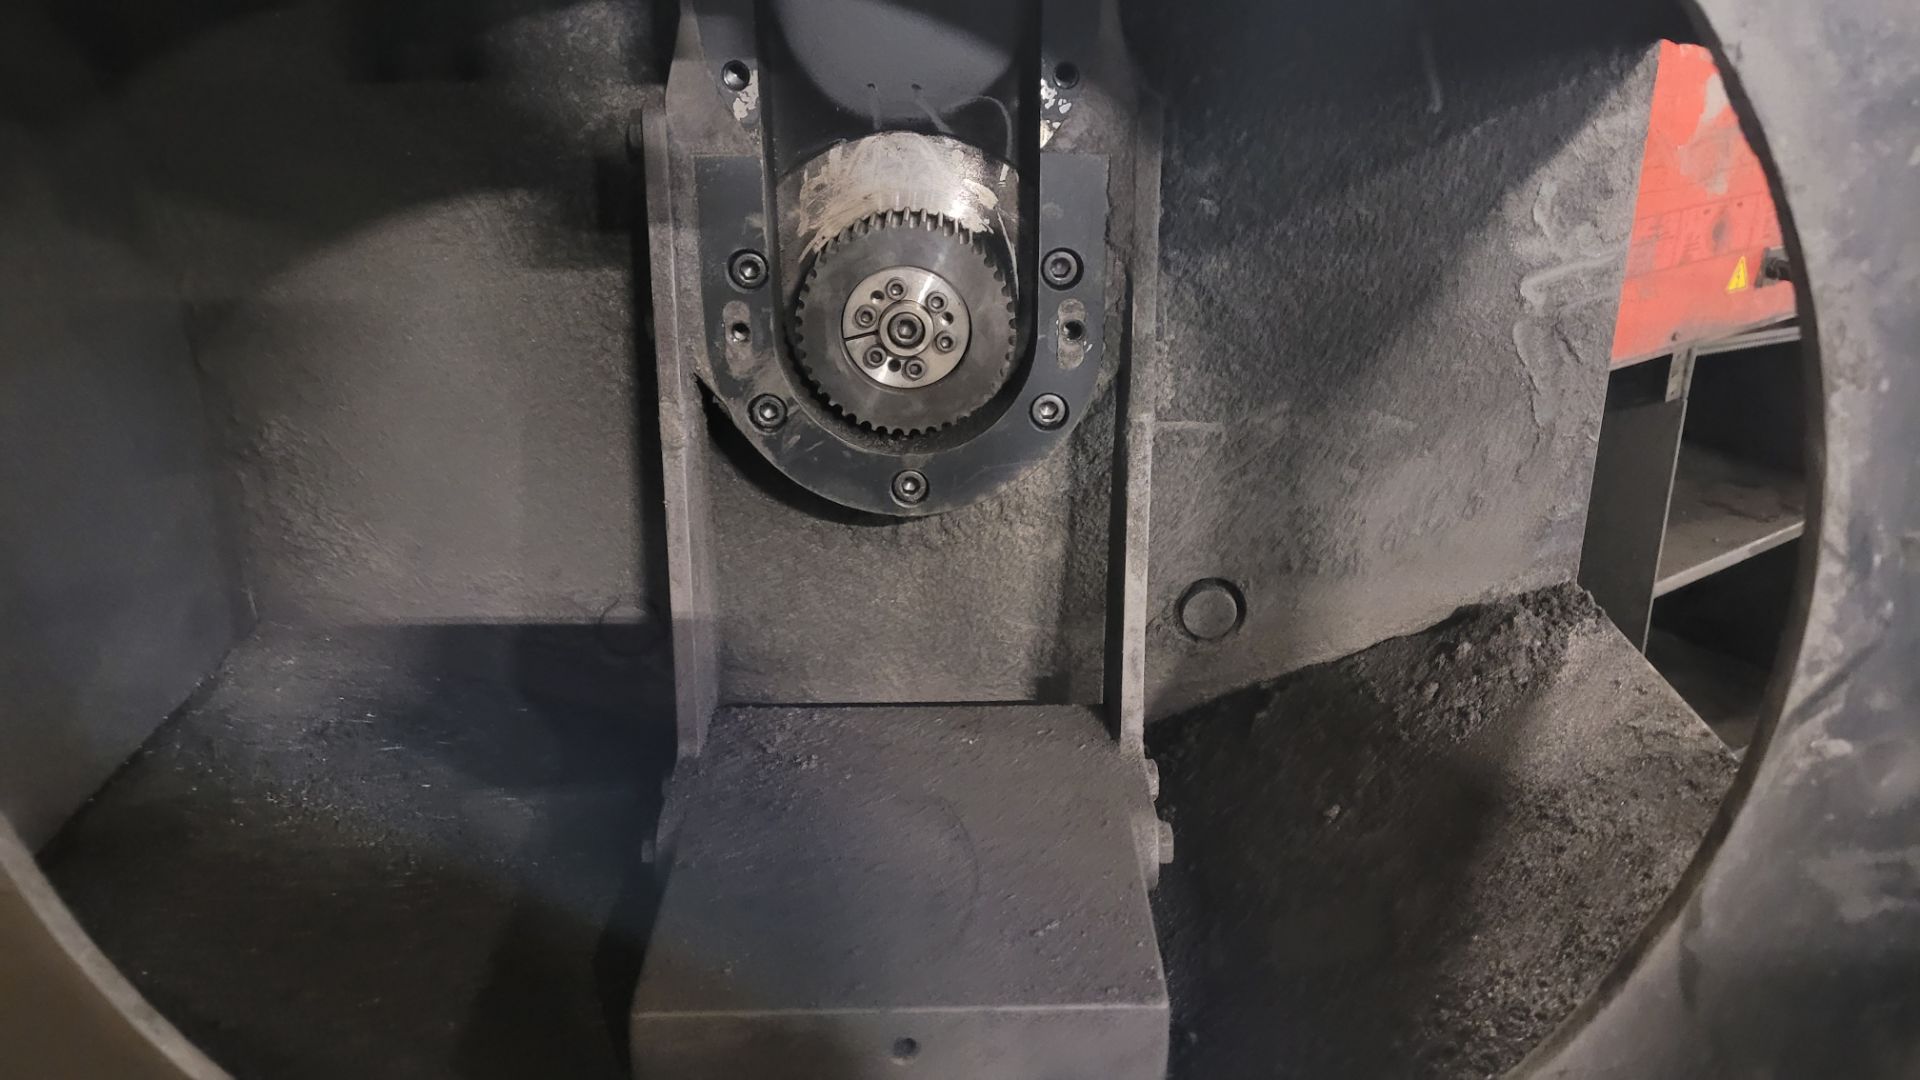 2017 RSA TURNAMAT DEBURRING MACHINE, 1,500 - 3,000 RPM, S/N 12584-10 (RIGGING FEE $50) - Image 3 of 4